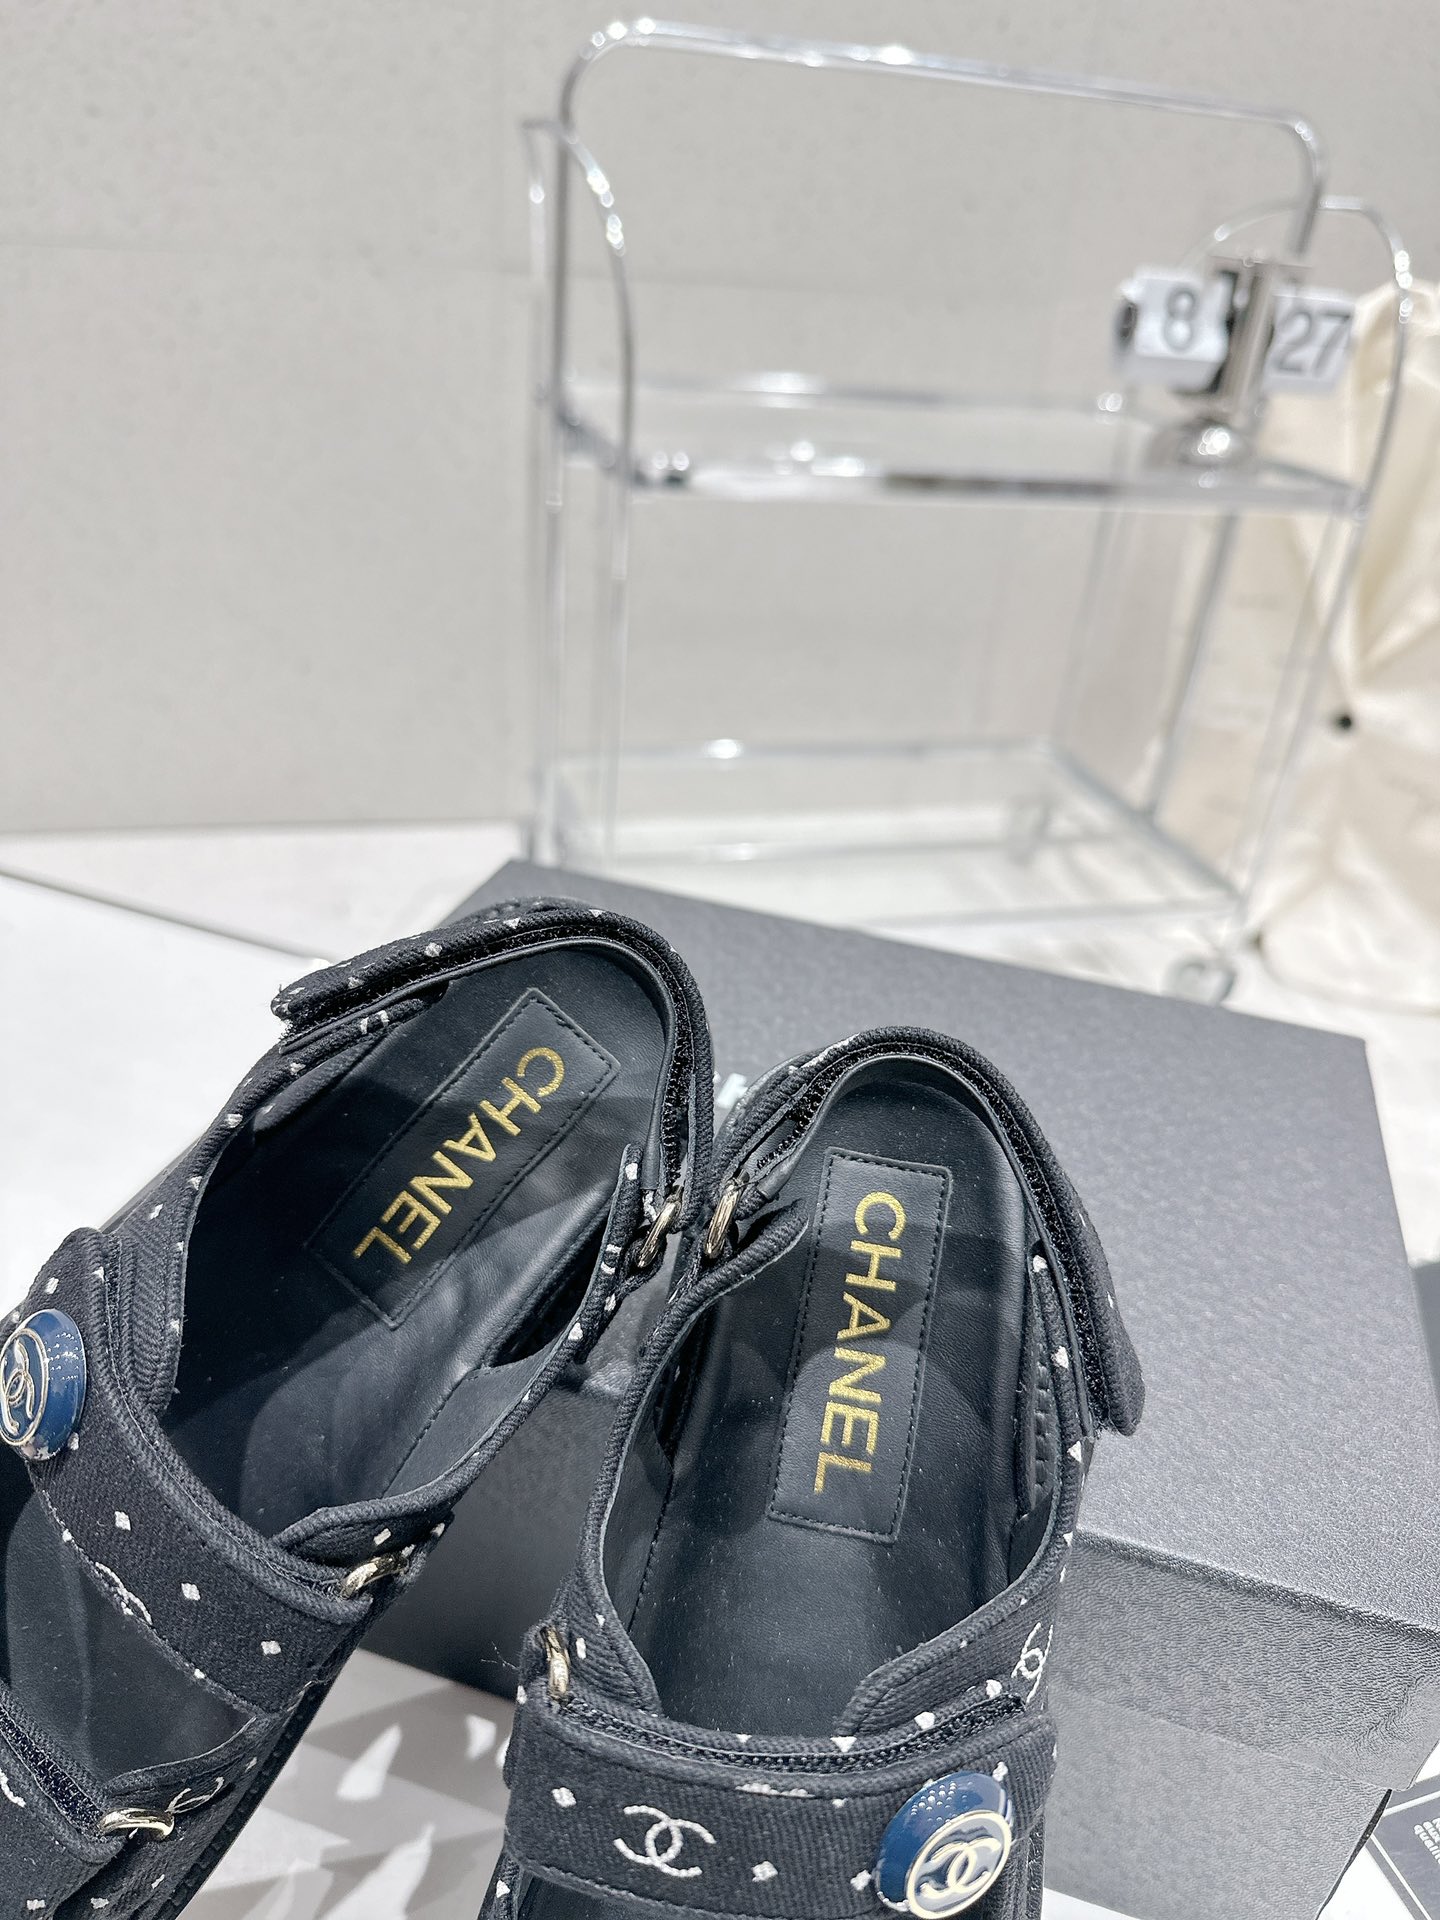 香奈儿Chanel沙滩凉鞋2023色